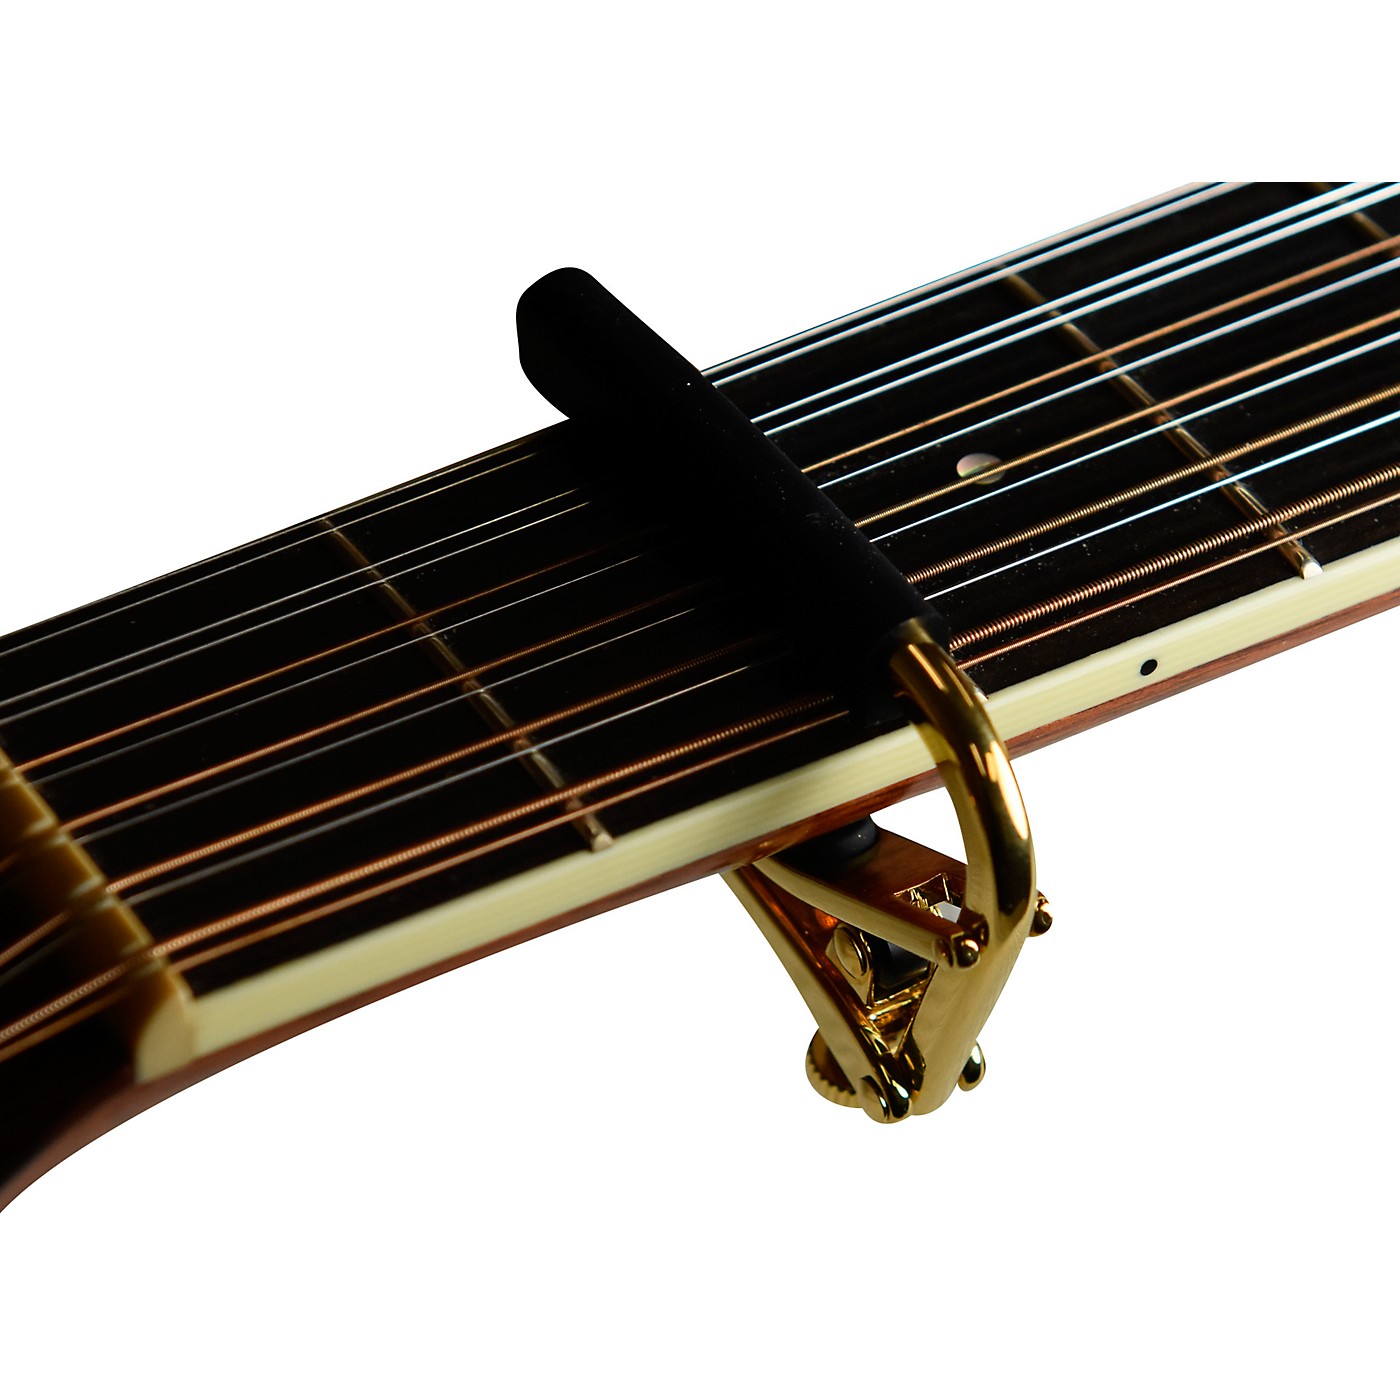 Shubb Capo Royale Series C3G Capo For 12 String Guitar, Gold Finish thumbnail